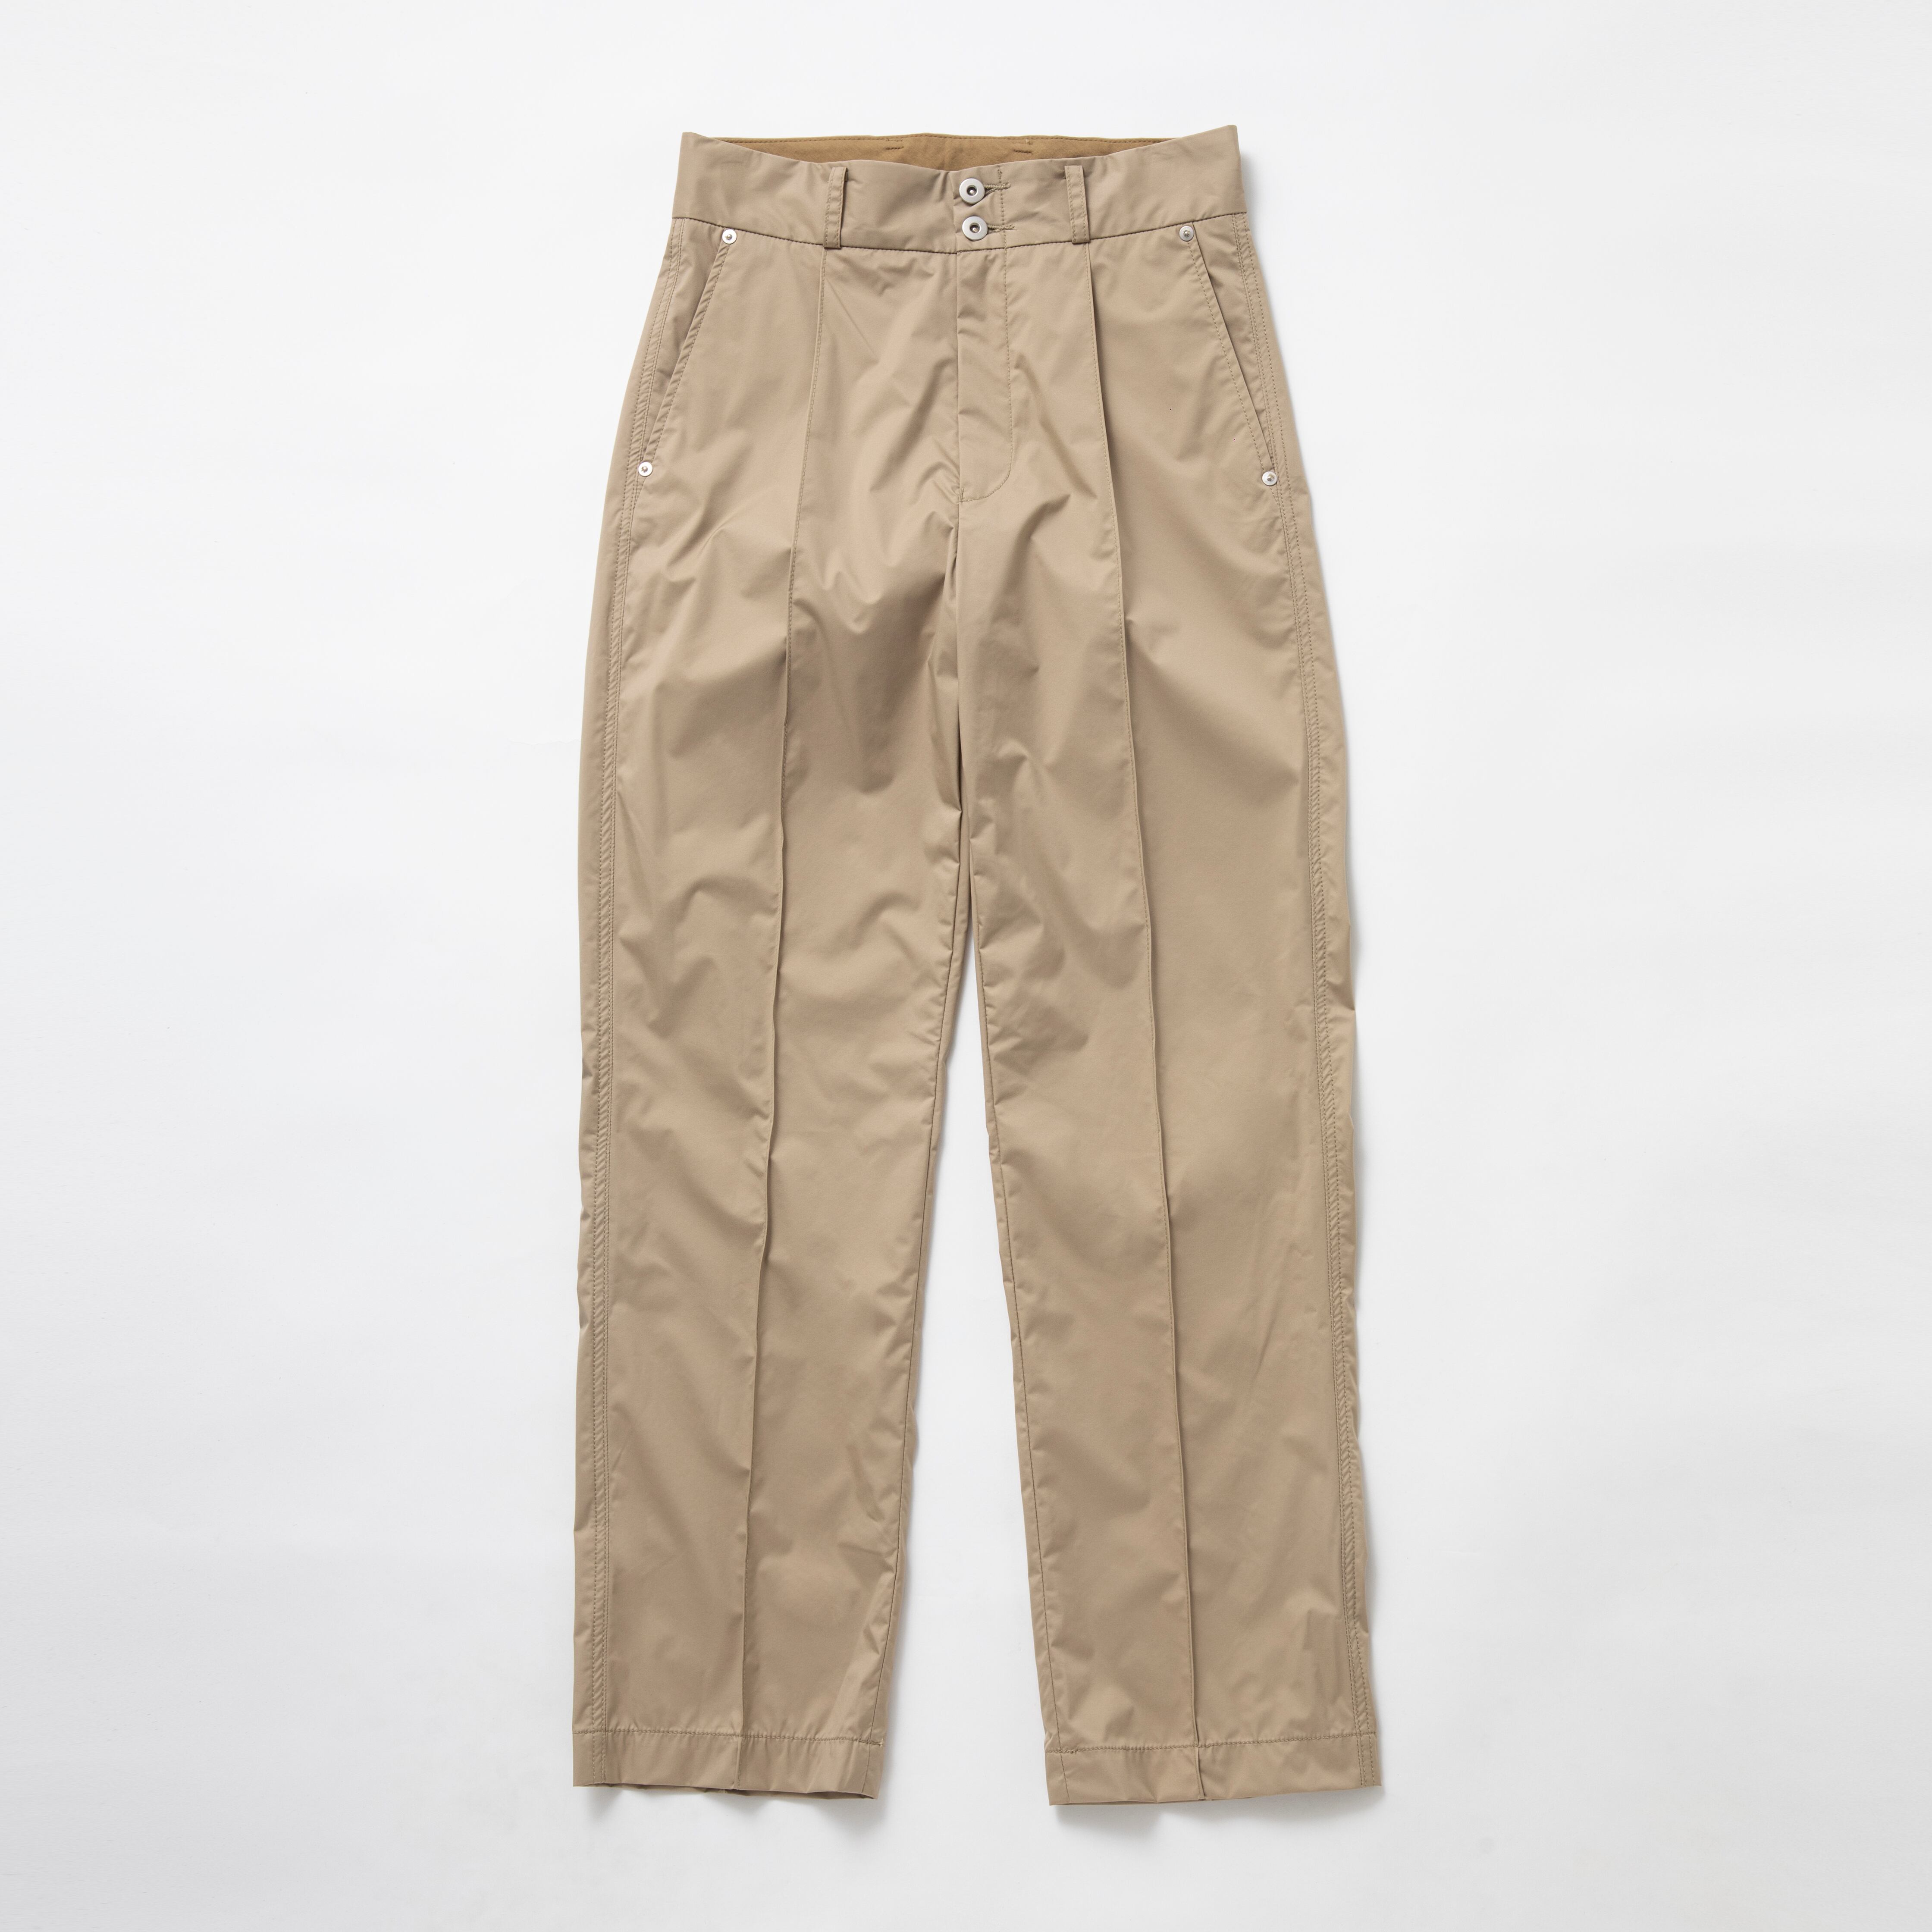 Water proof straight pants (beige)